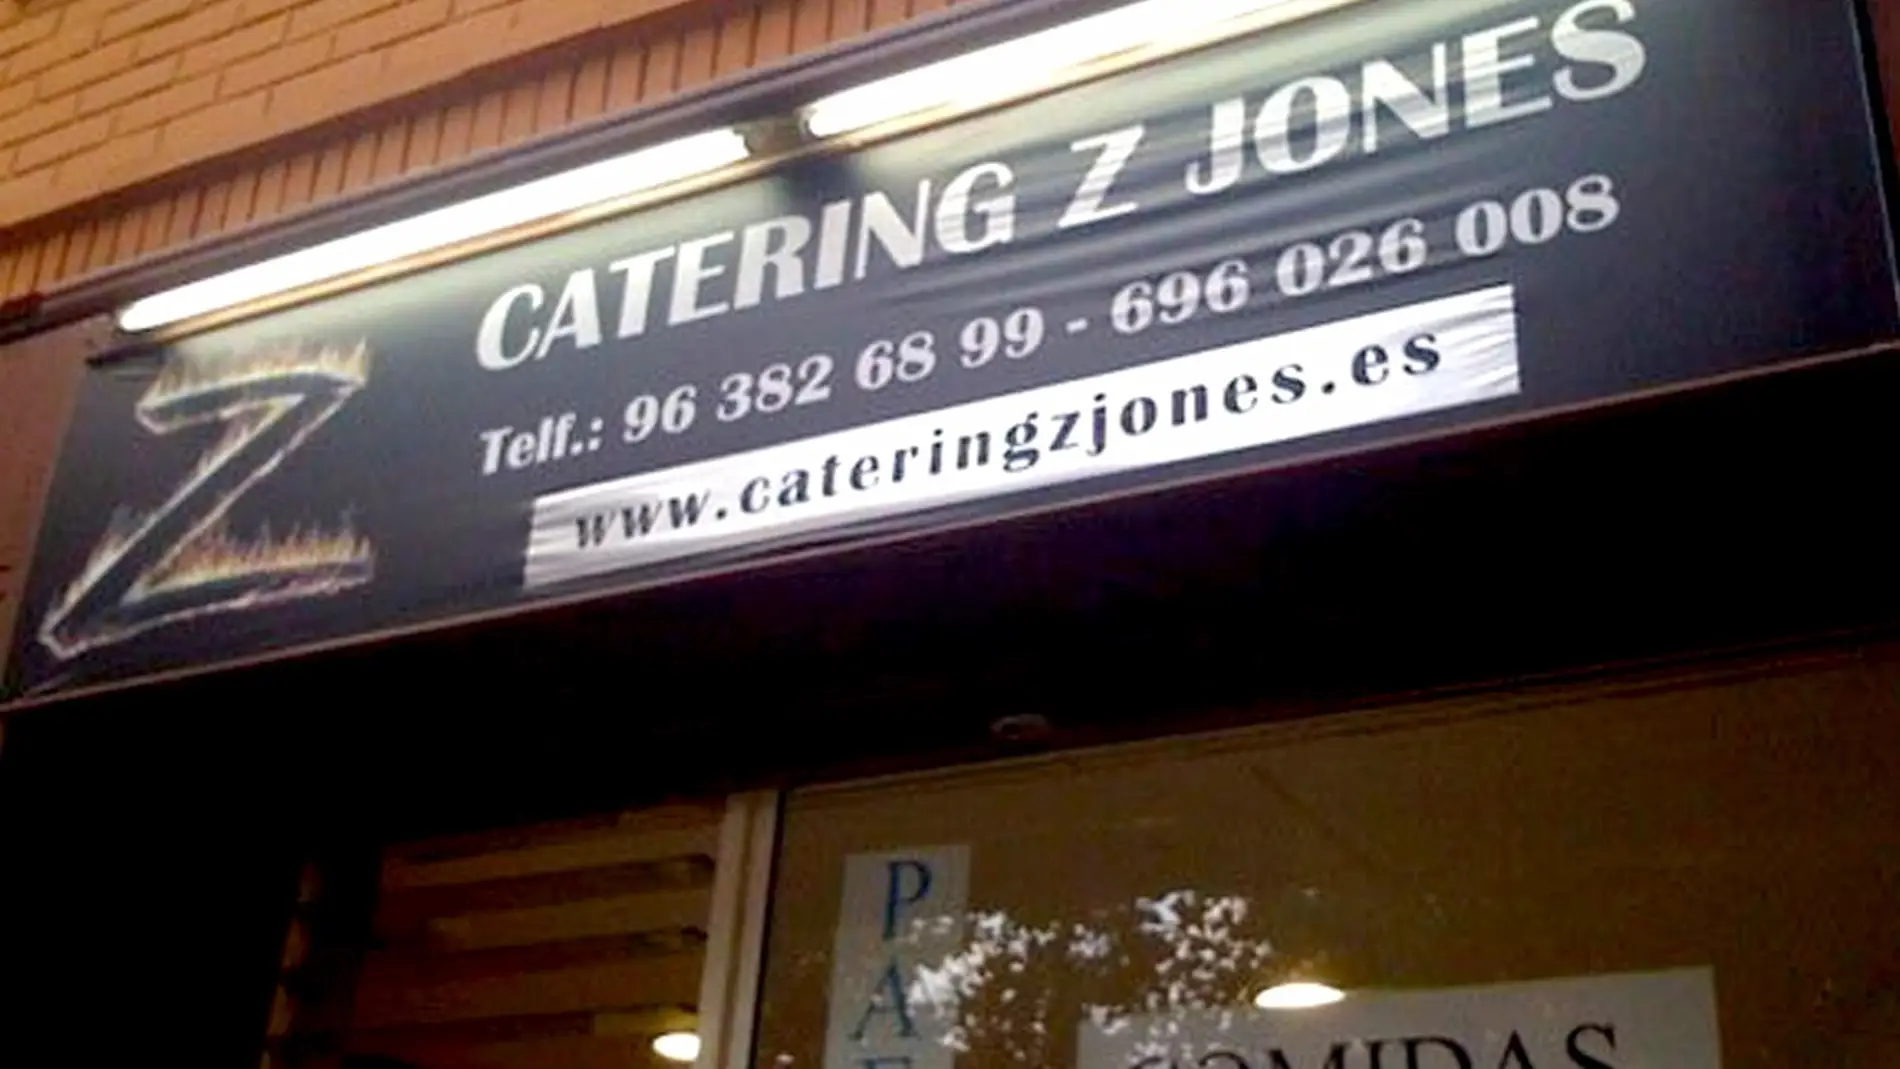 Catering Z.Jones